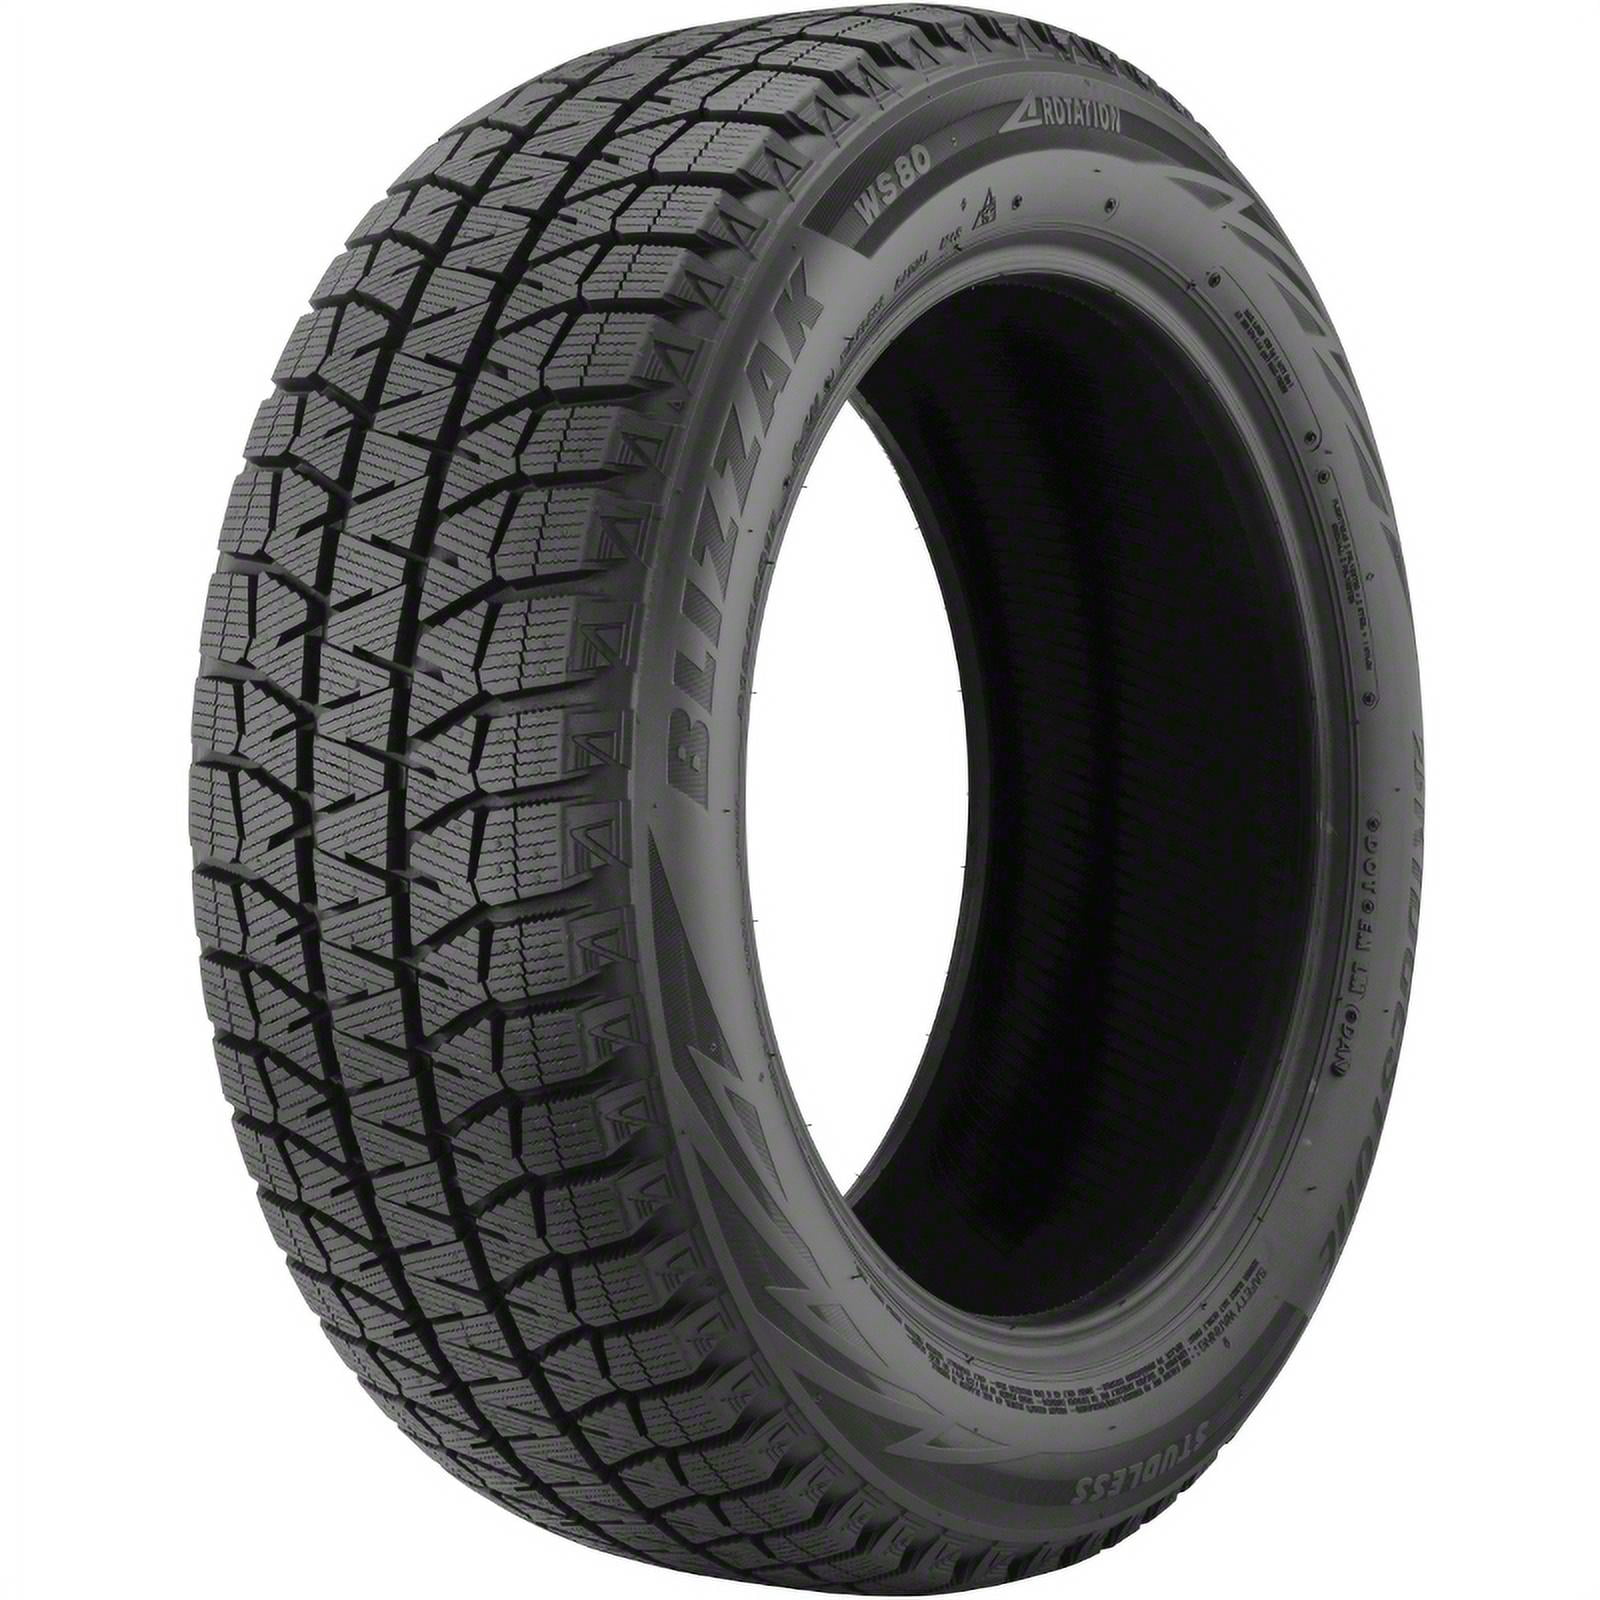 Bridgestone Blizzak WS80 205/55R16 91 H Tire